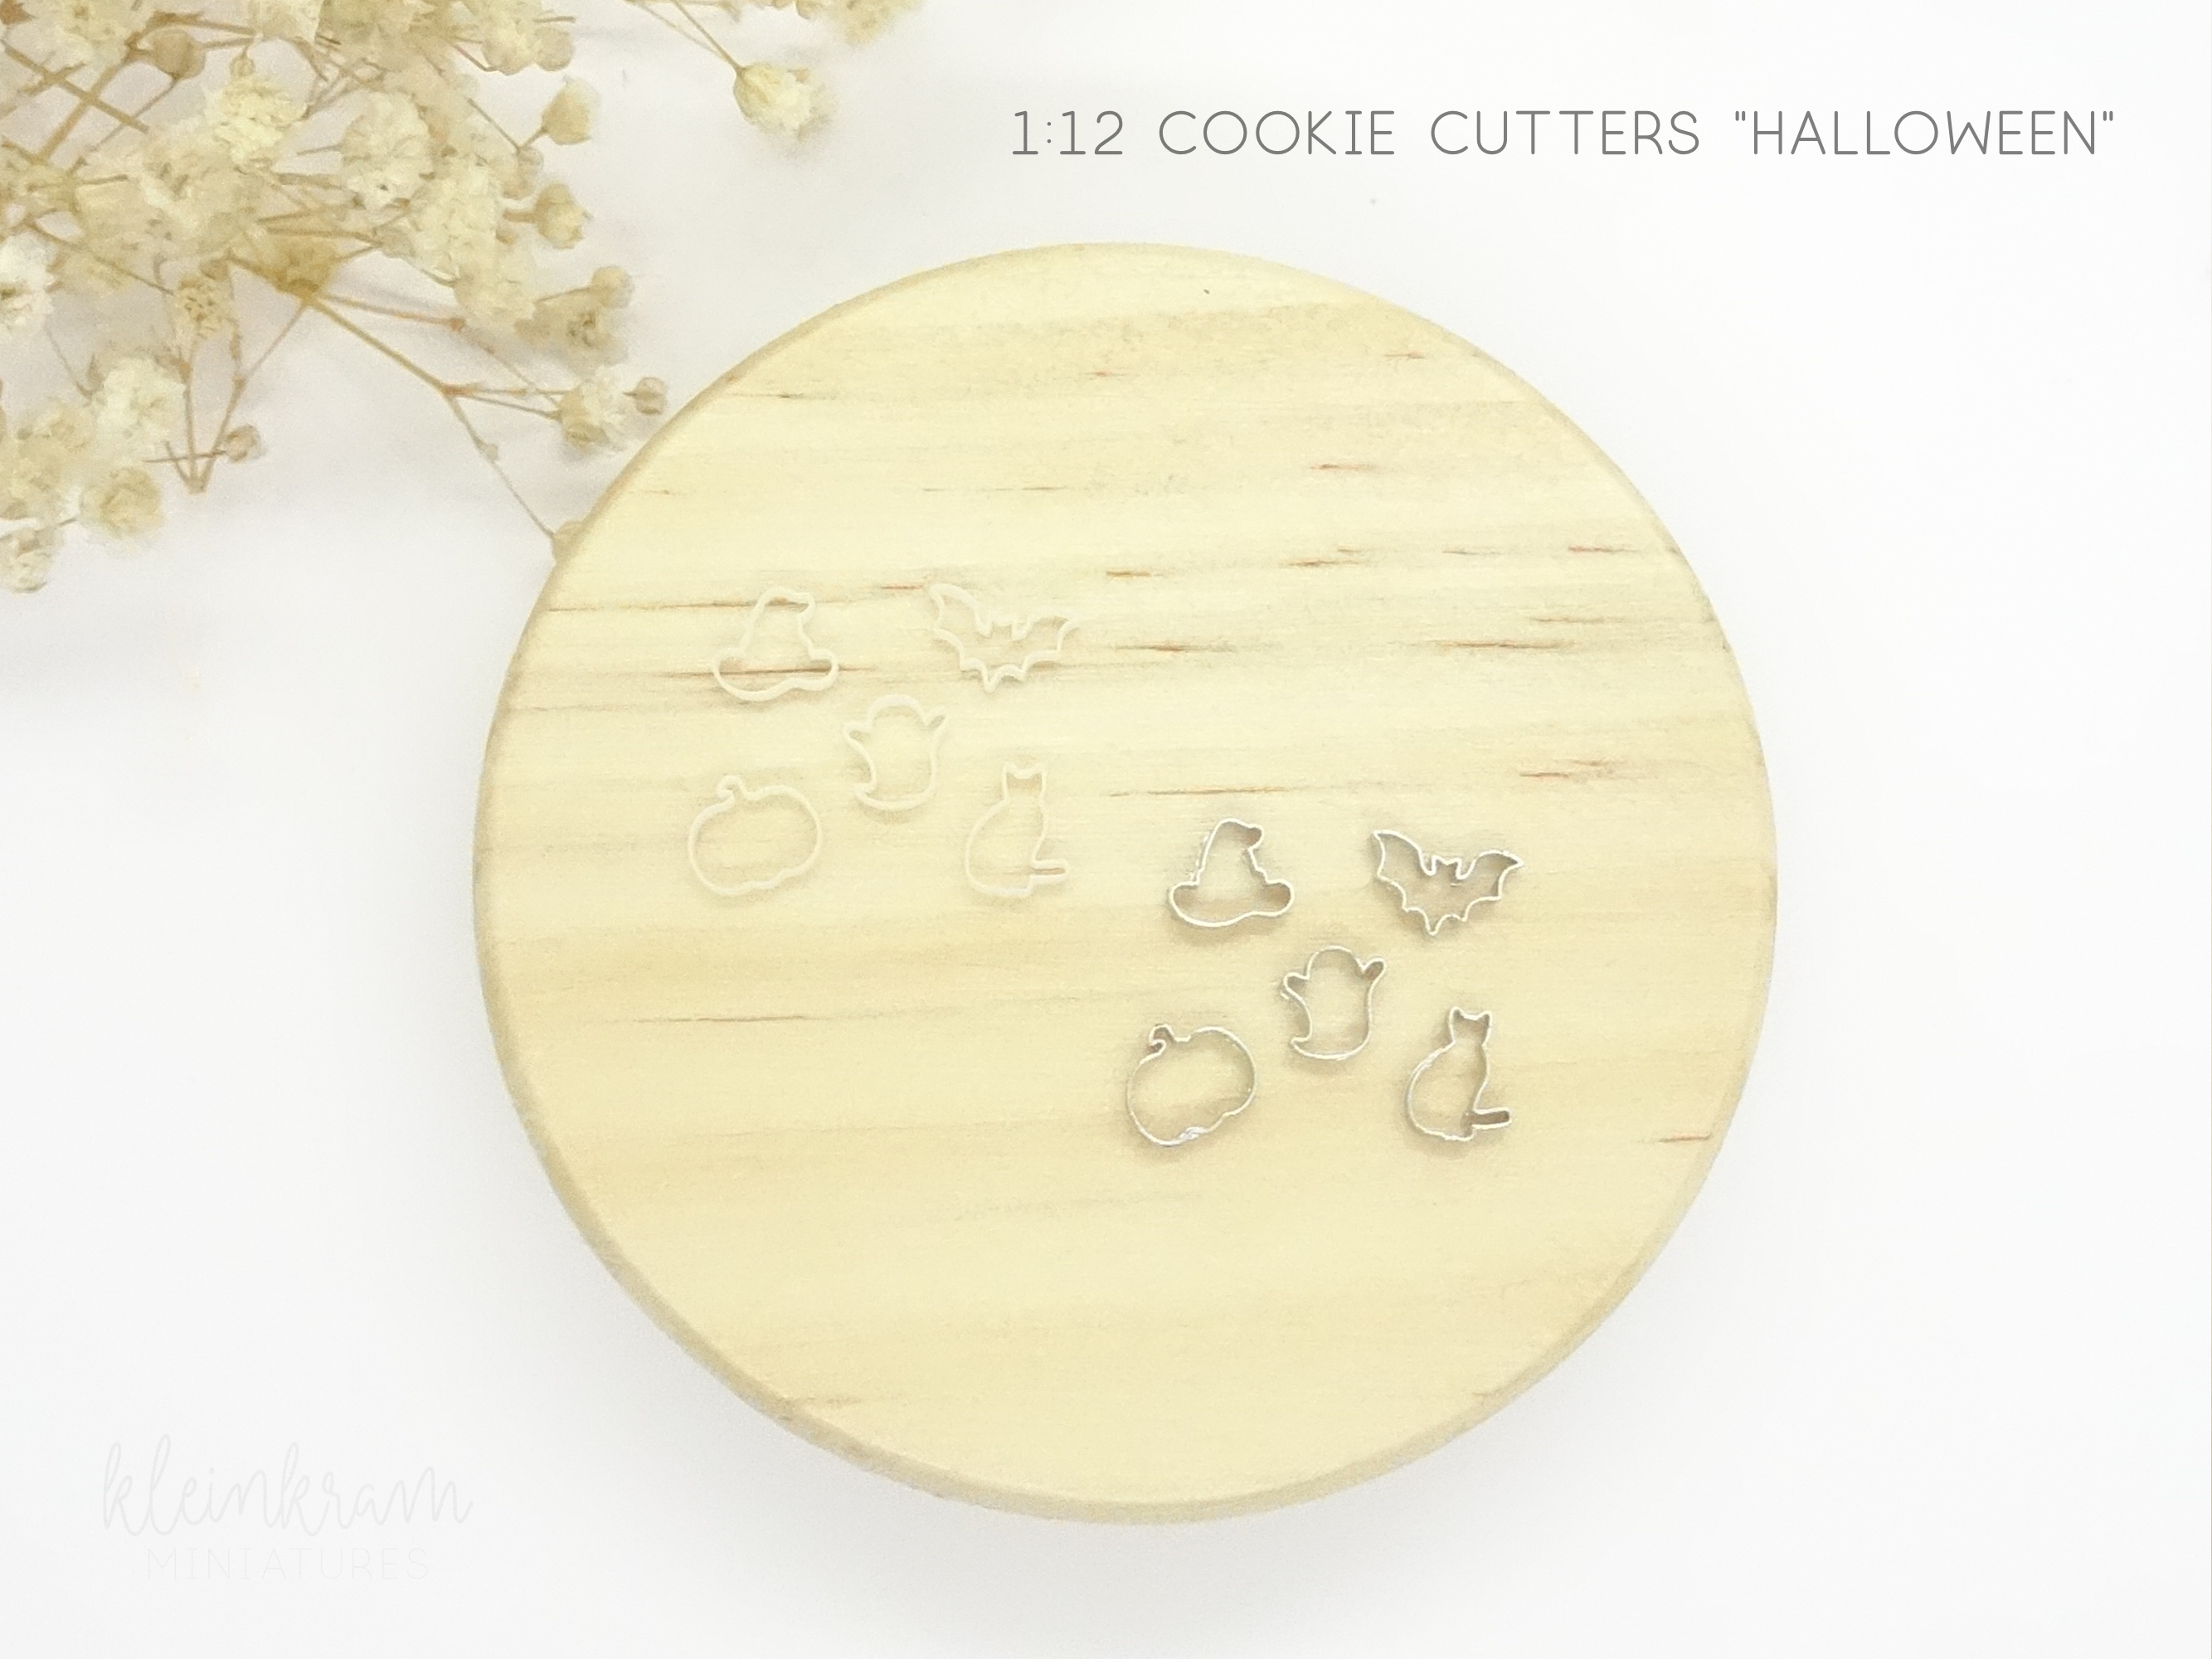 Cookie Cutters "Halloween" - Set of 5 - 1/12 Miniatures